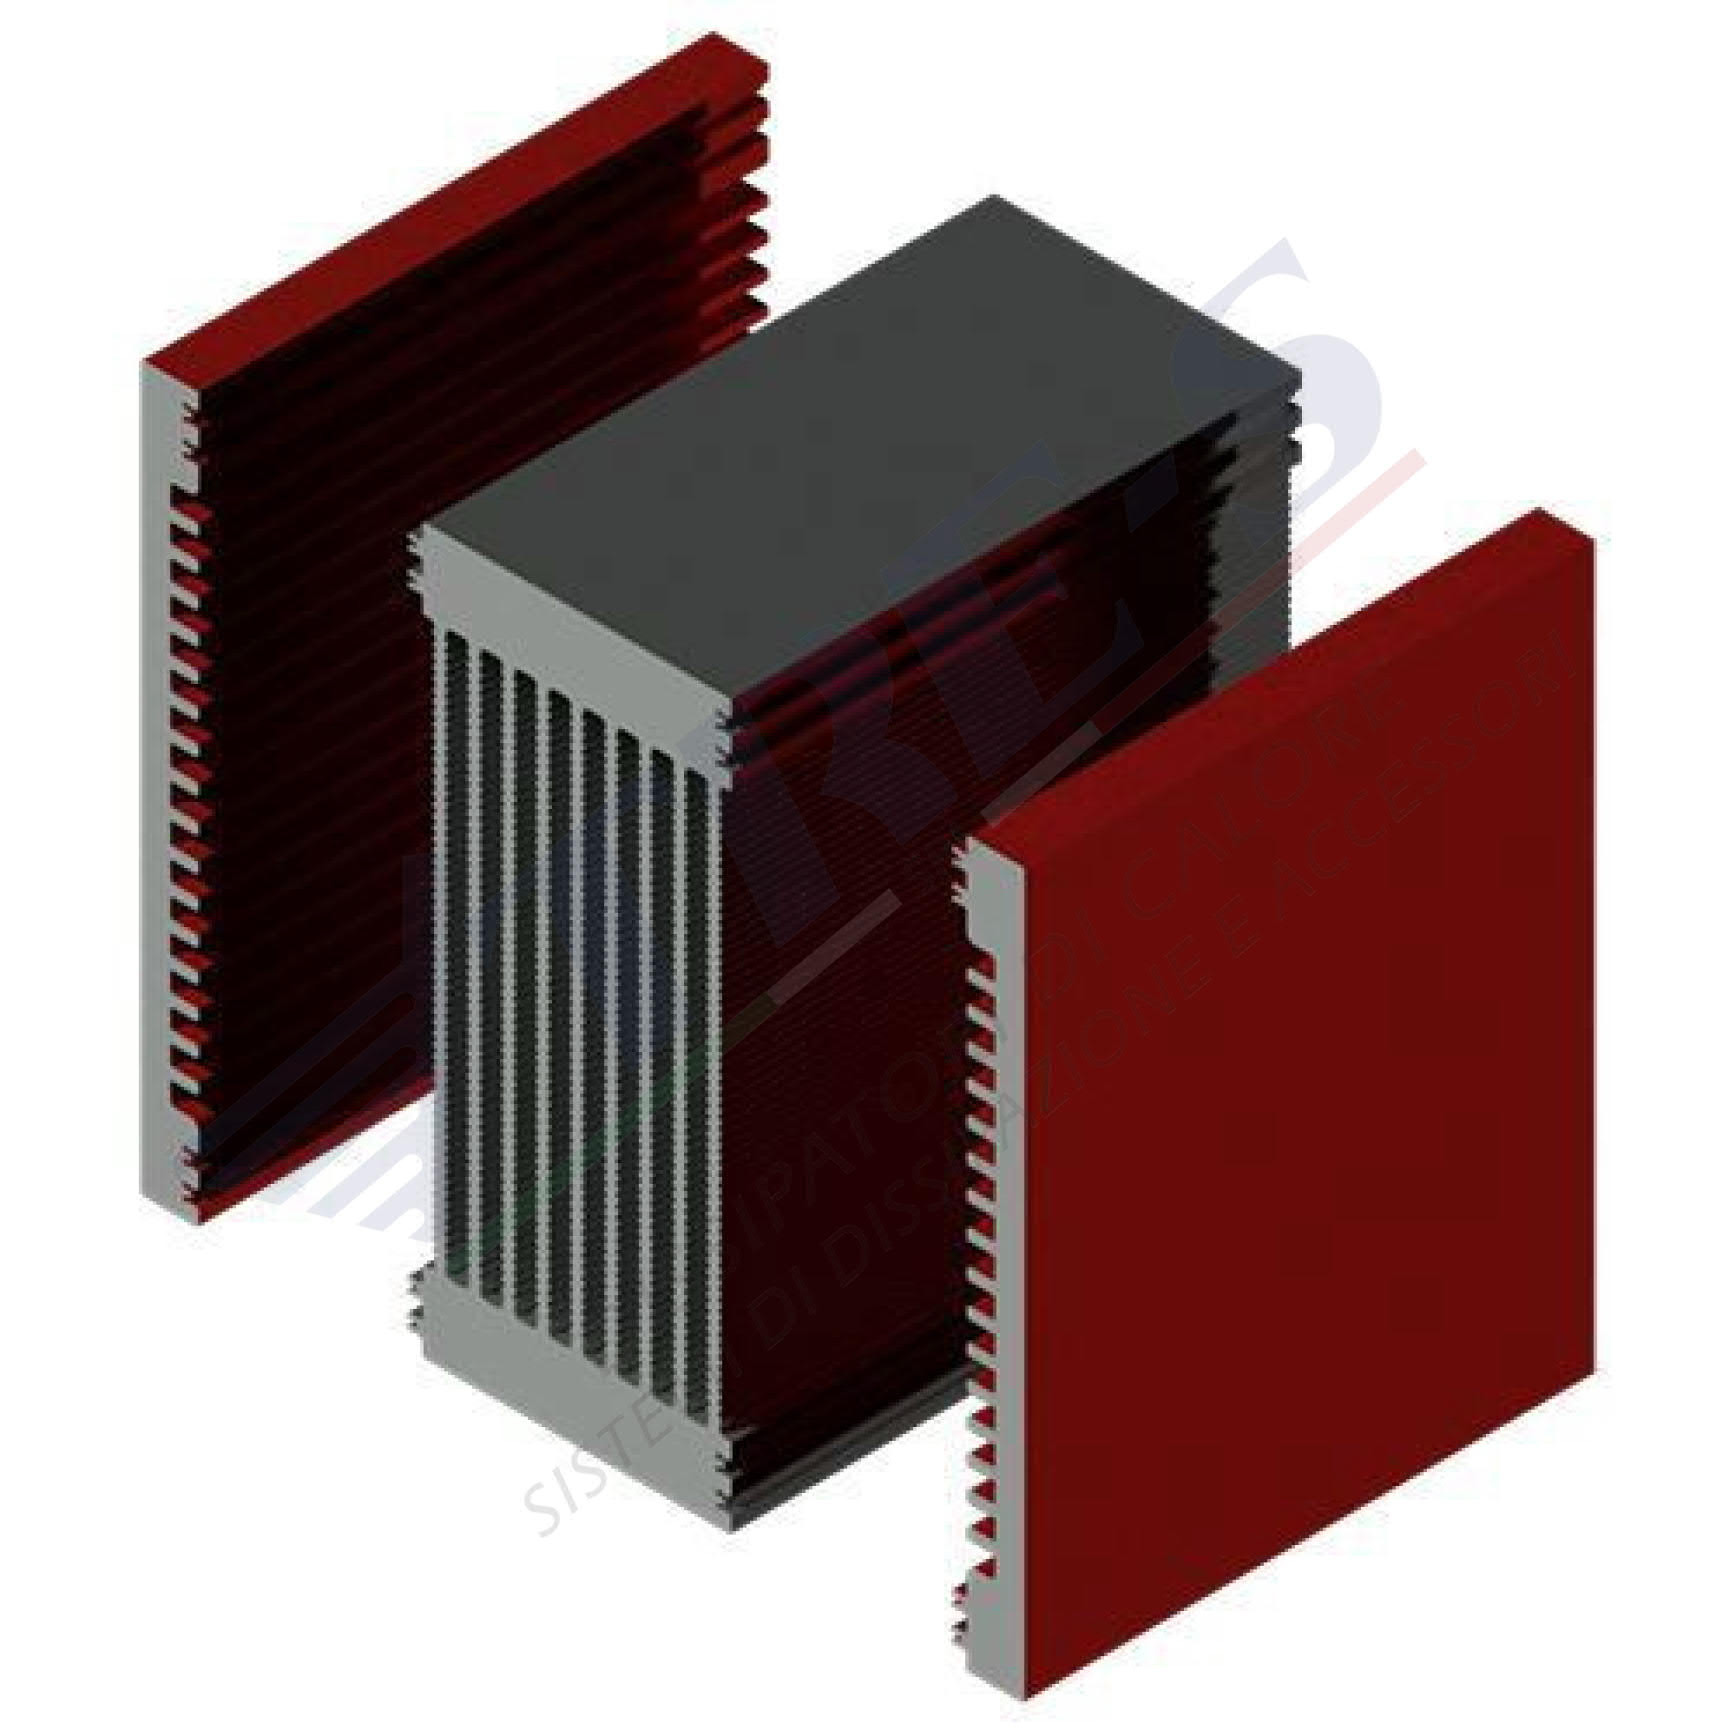 PRI1033AB - Embedded heat sinks